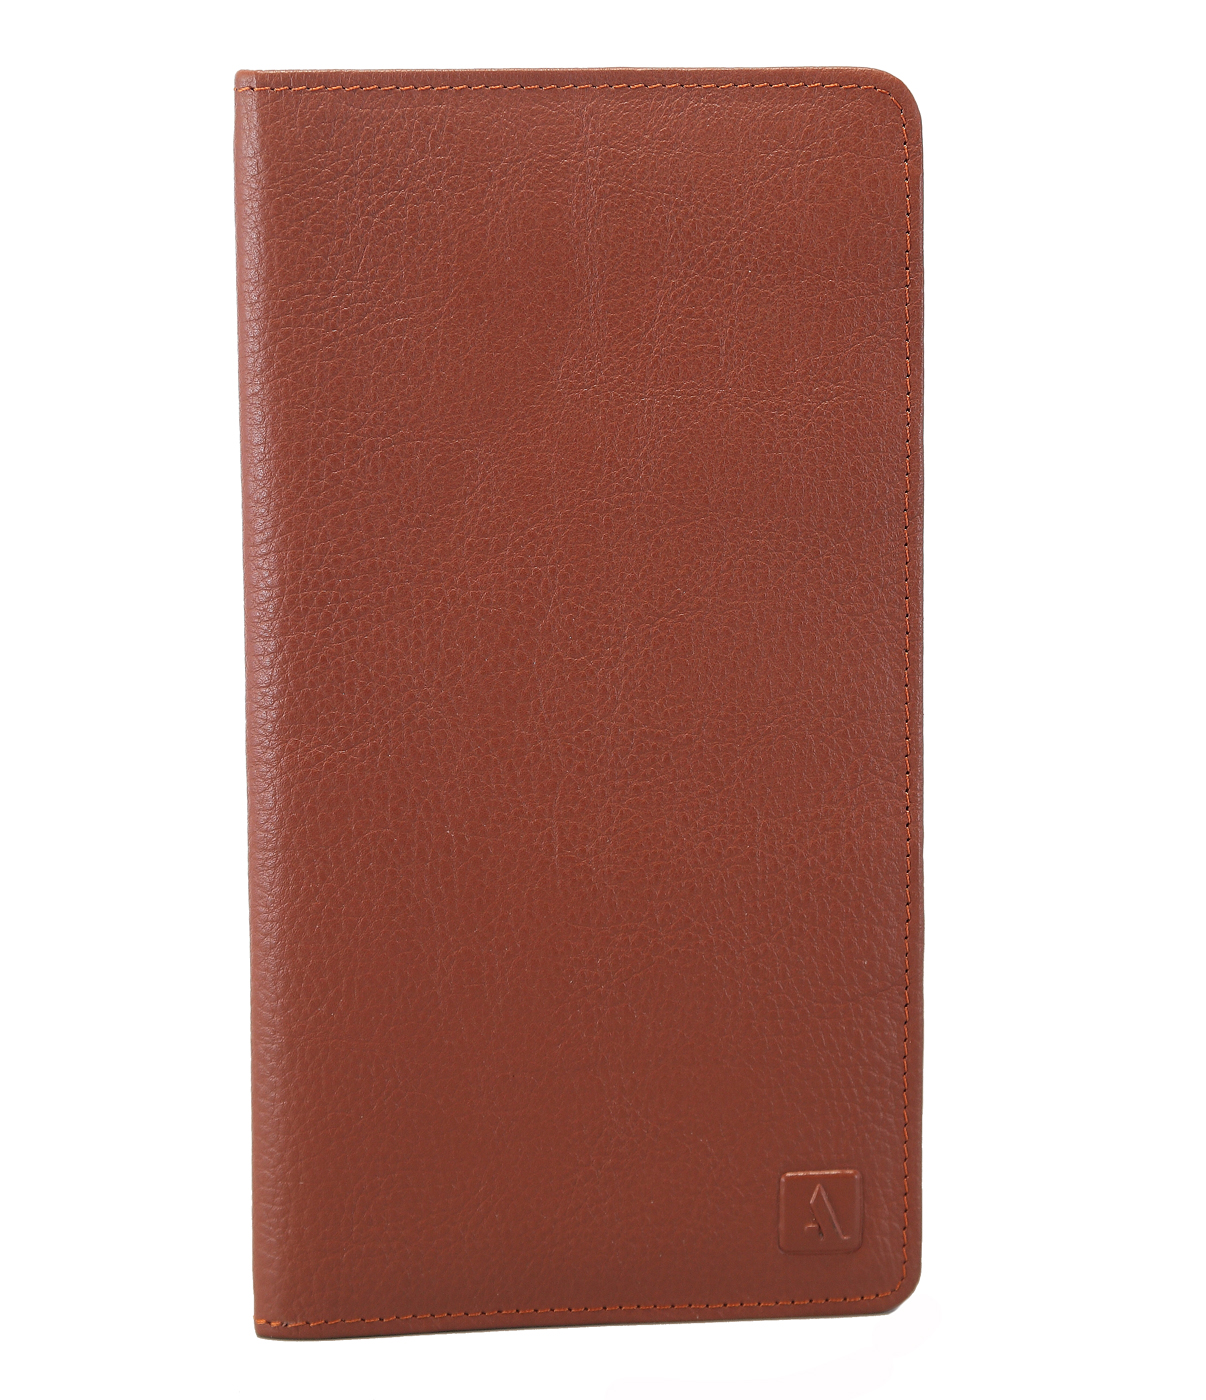 Wallet-Rafel-Travel Document Wallet In Genuine Leather - Tan